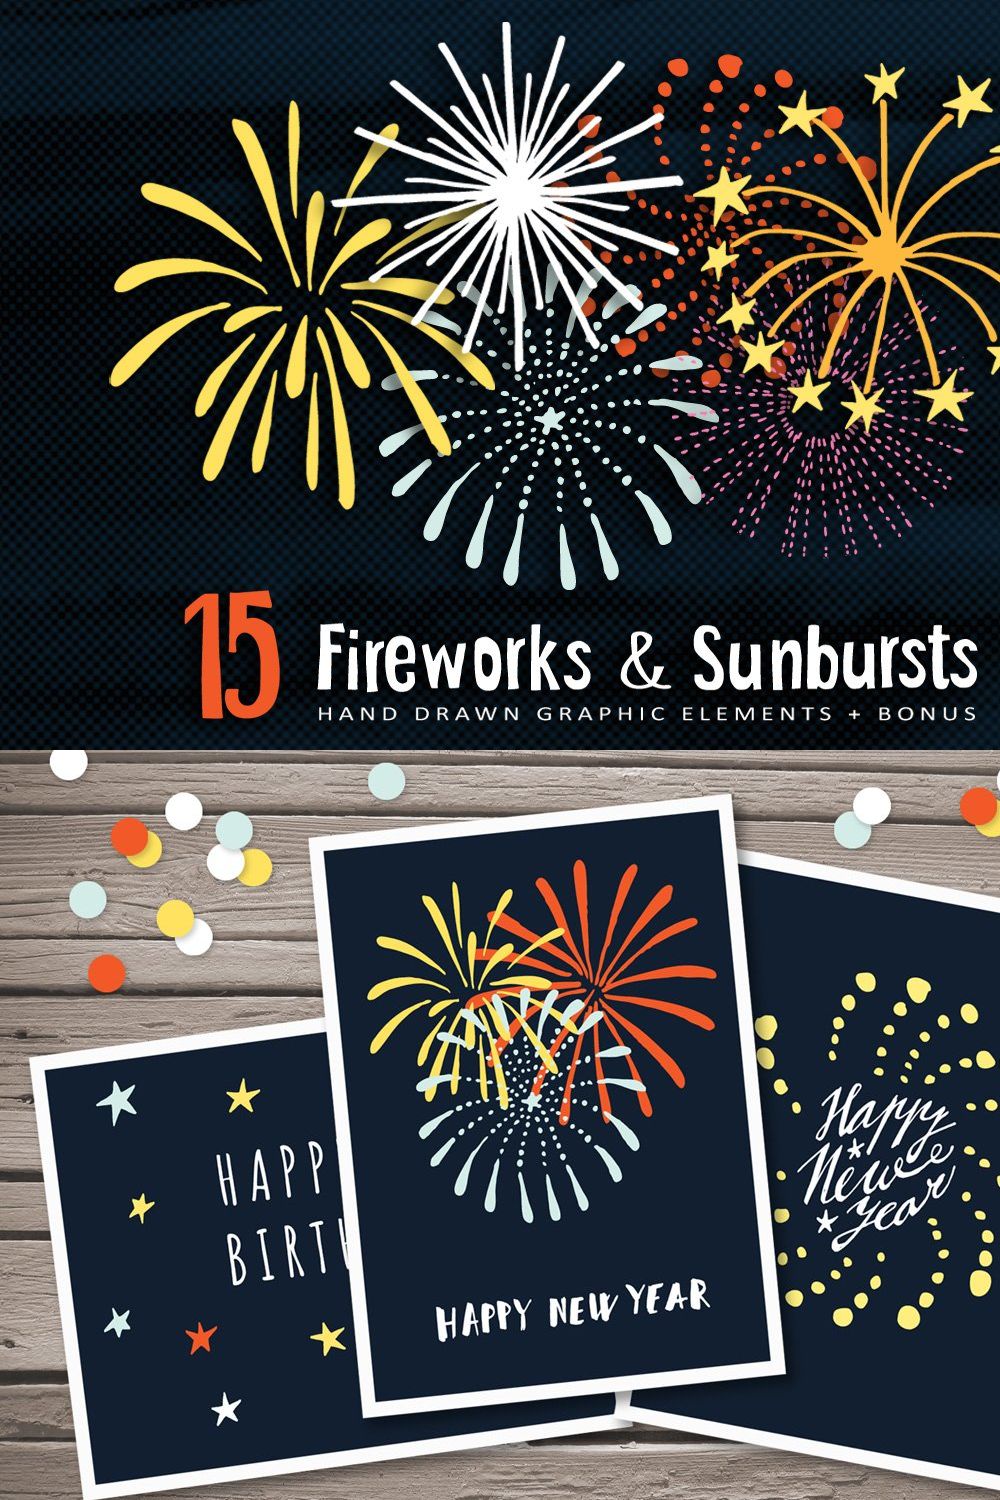 Hand drawn Fireworks & Sunbursts set pinterest preview image.